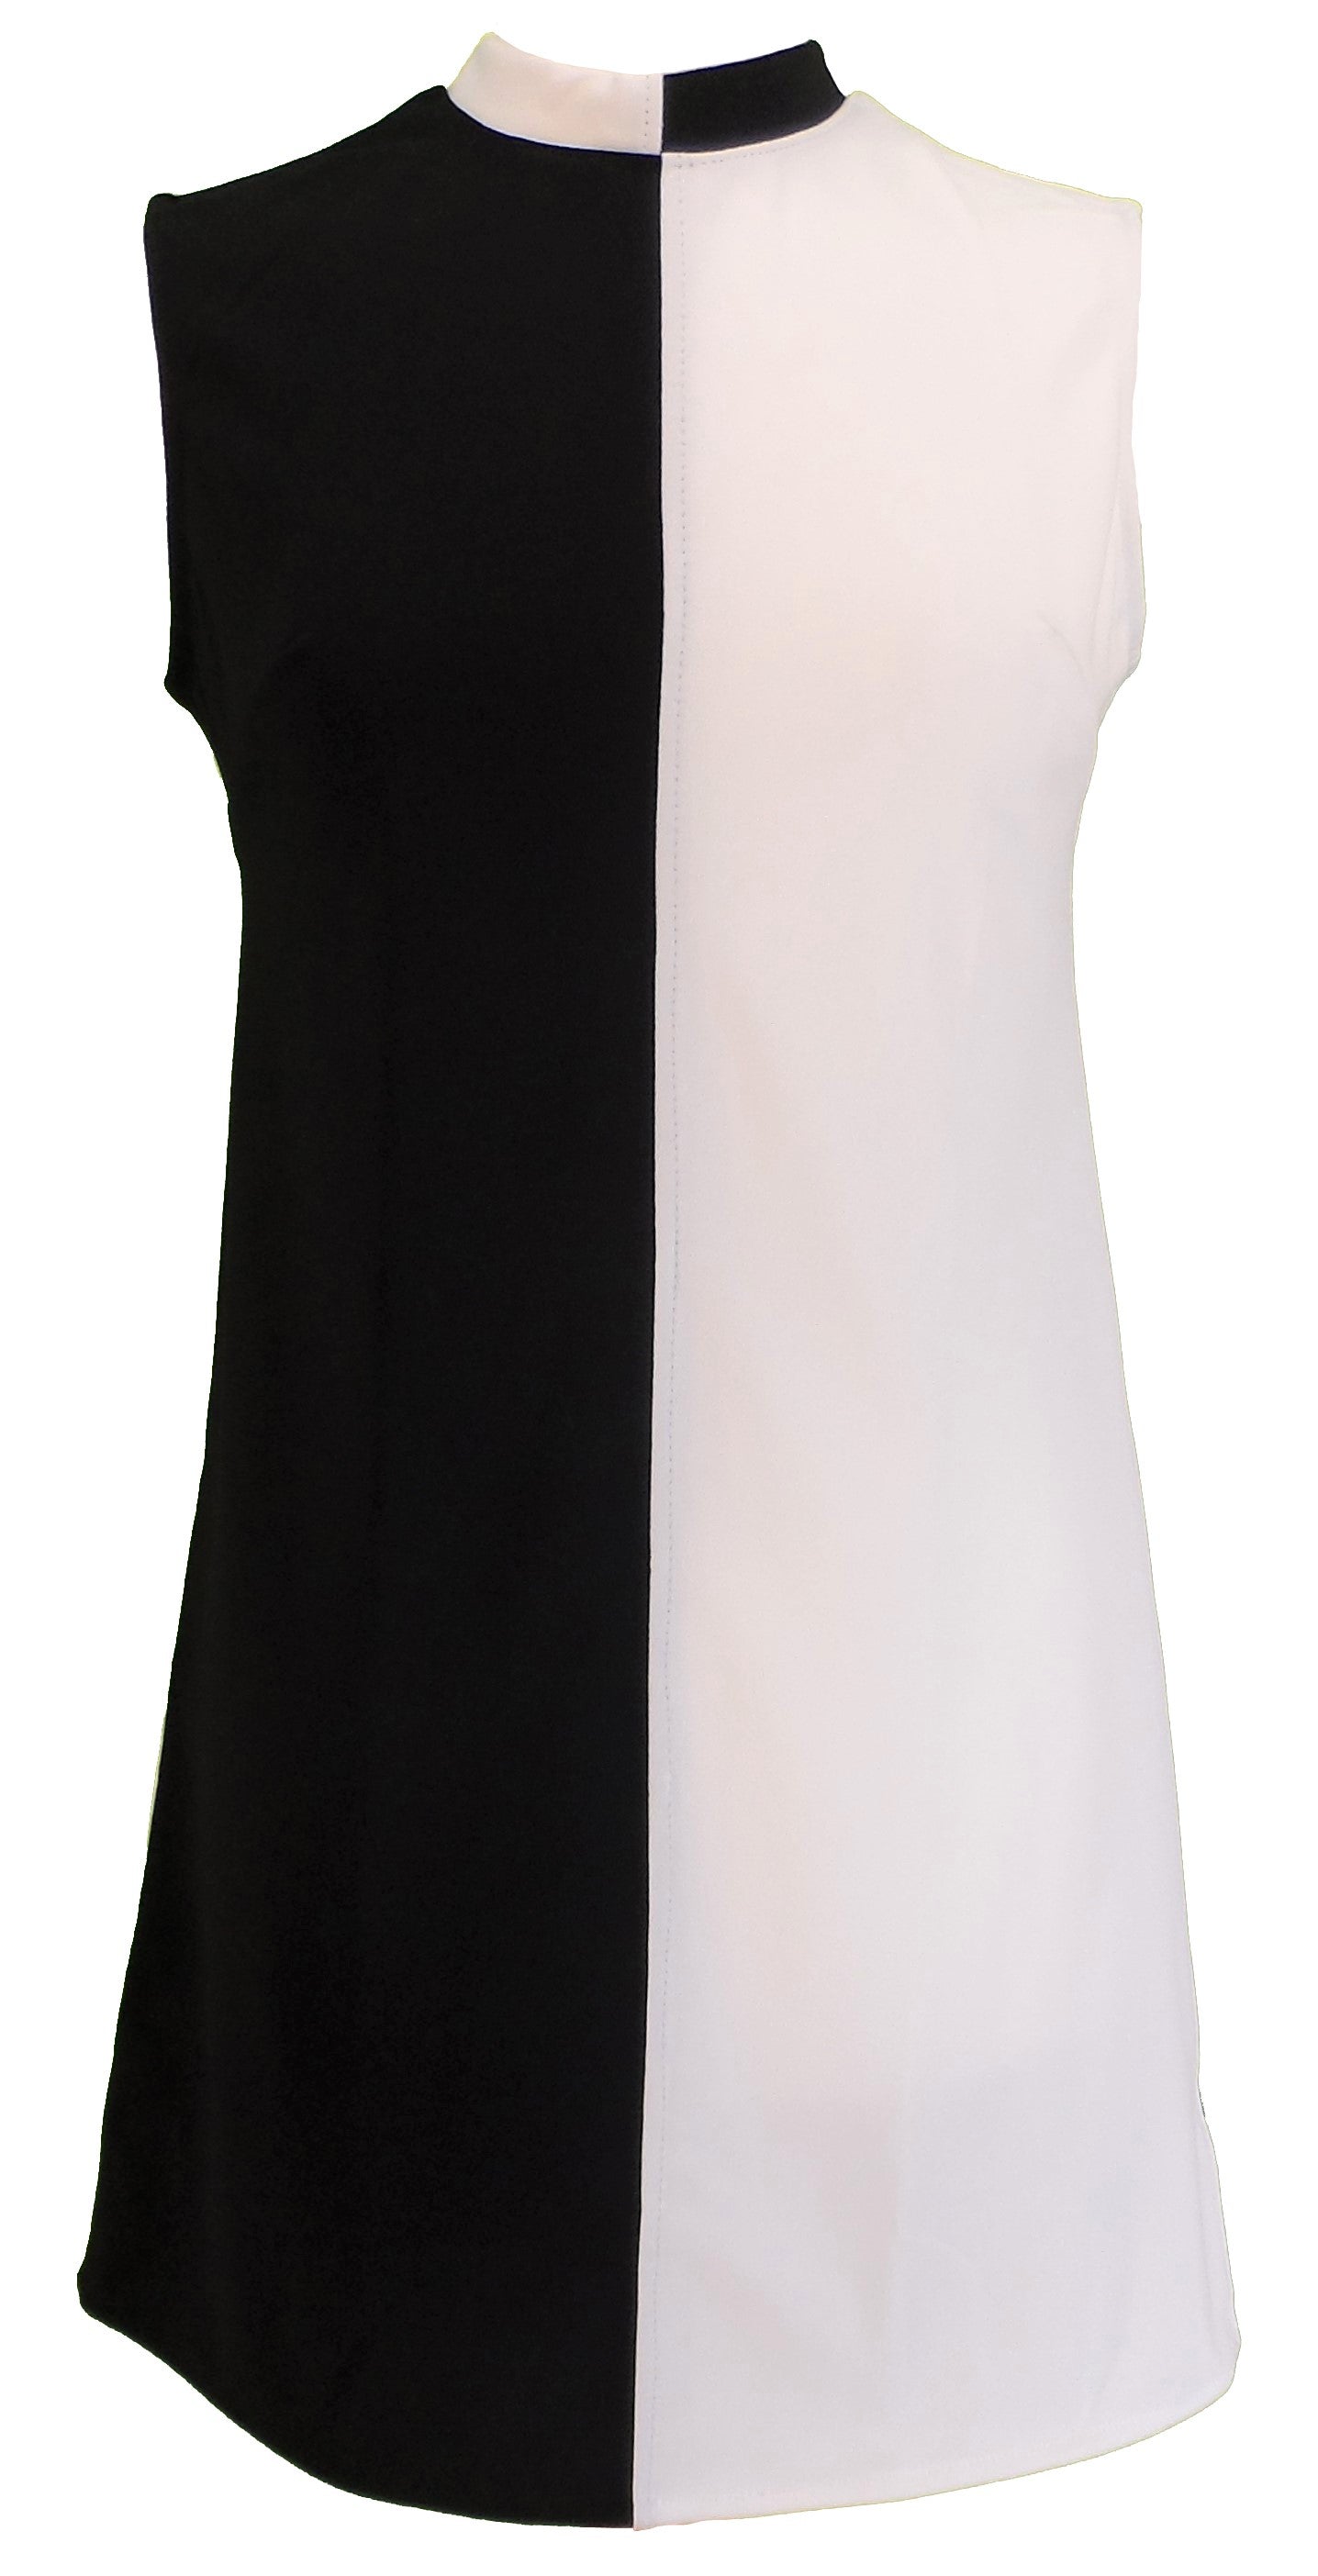 Ladies Retro Black and White Mod 2 Tone Dress